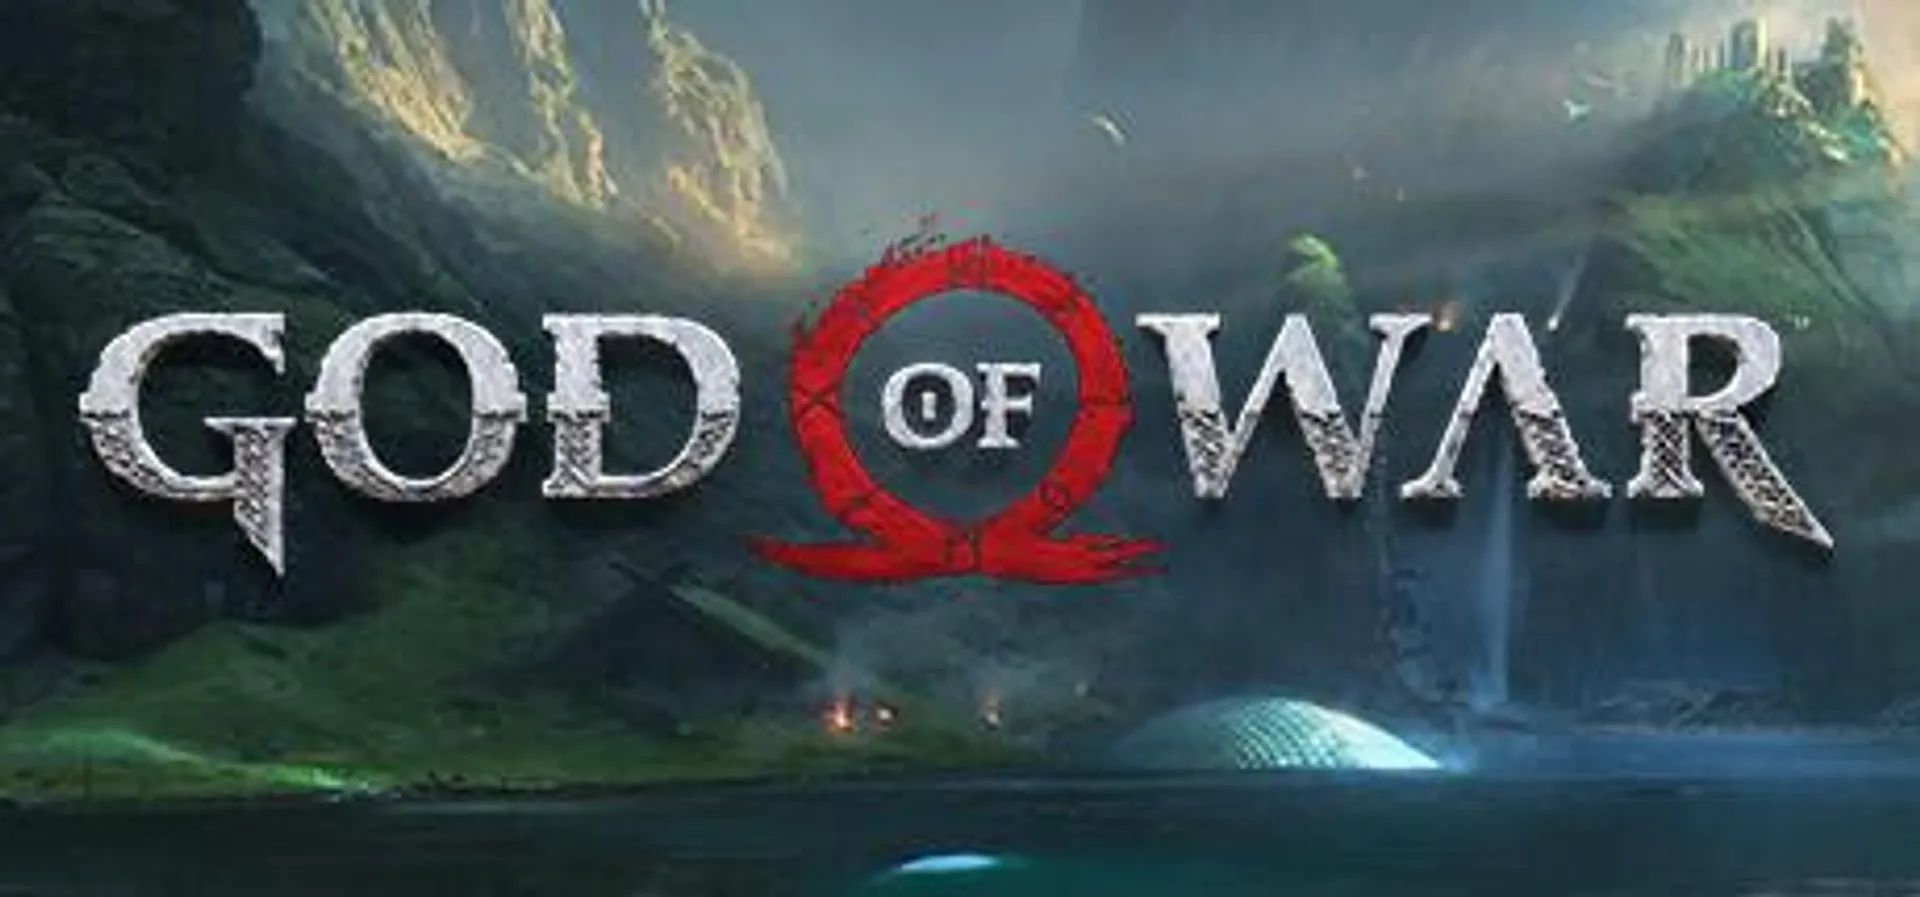 Save 25% on God of War on Steam